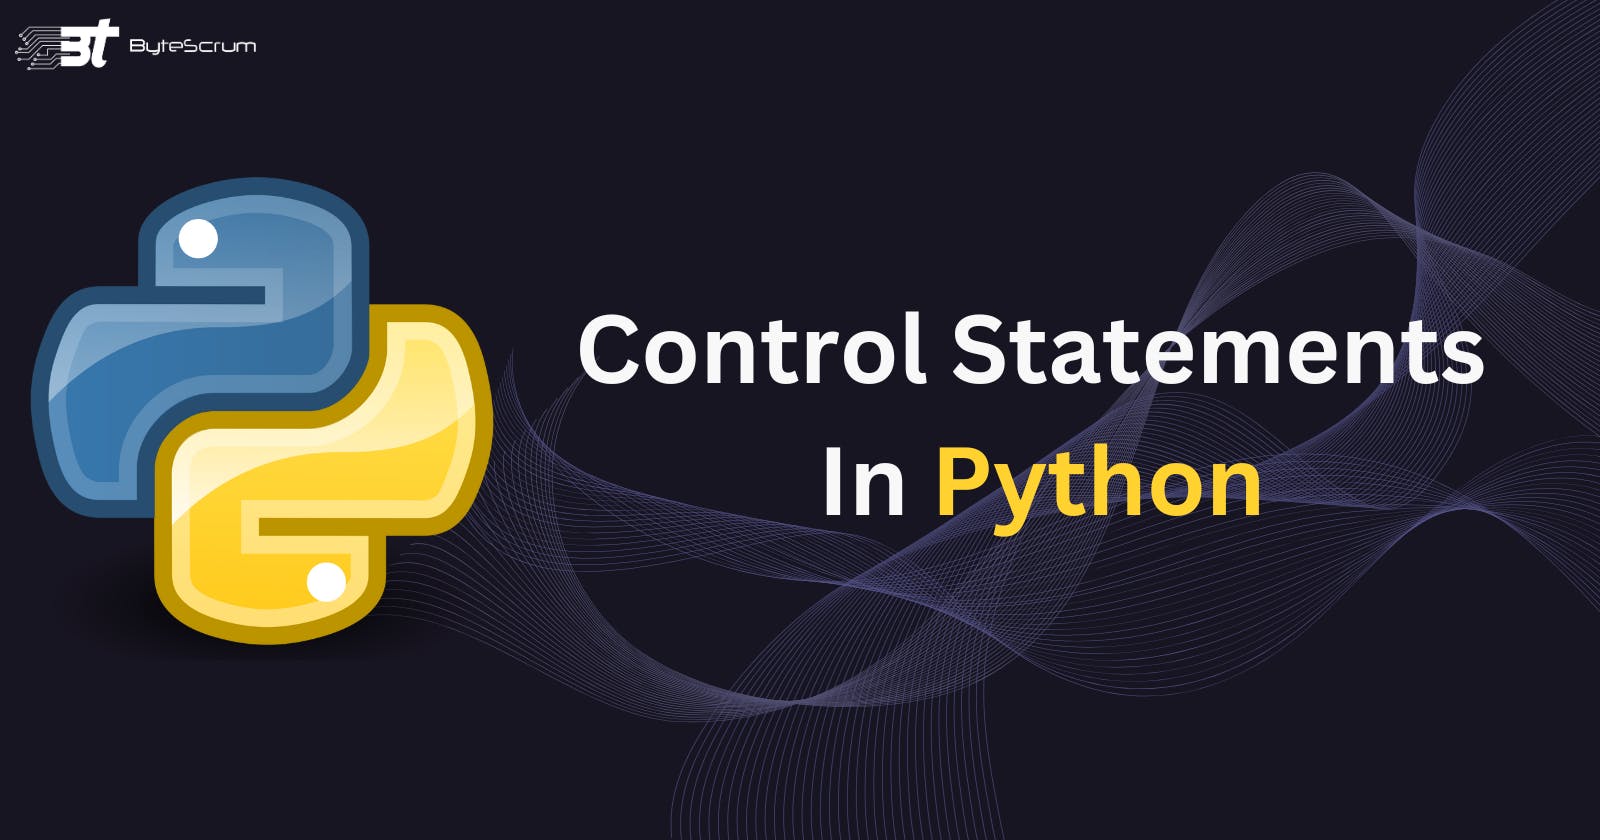 Python Control Statements